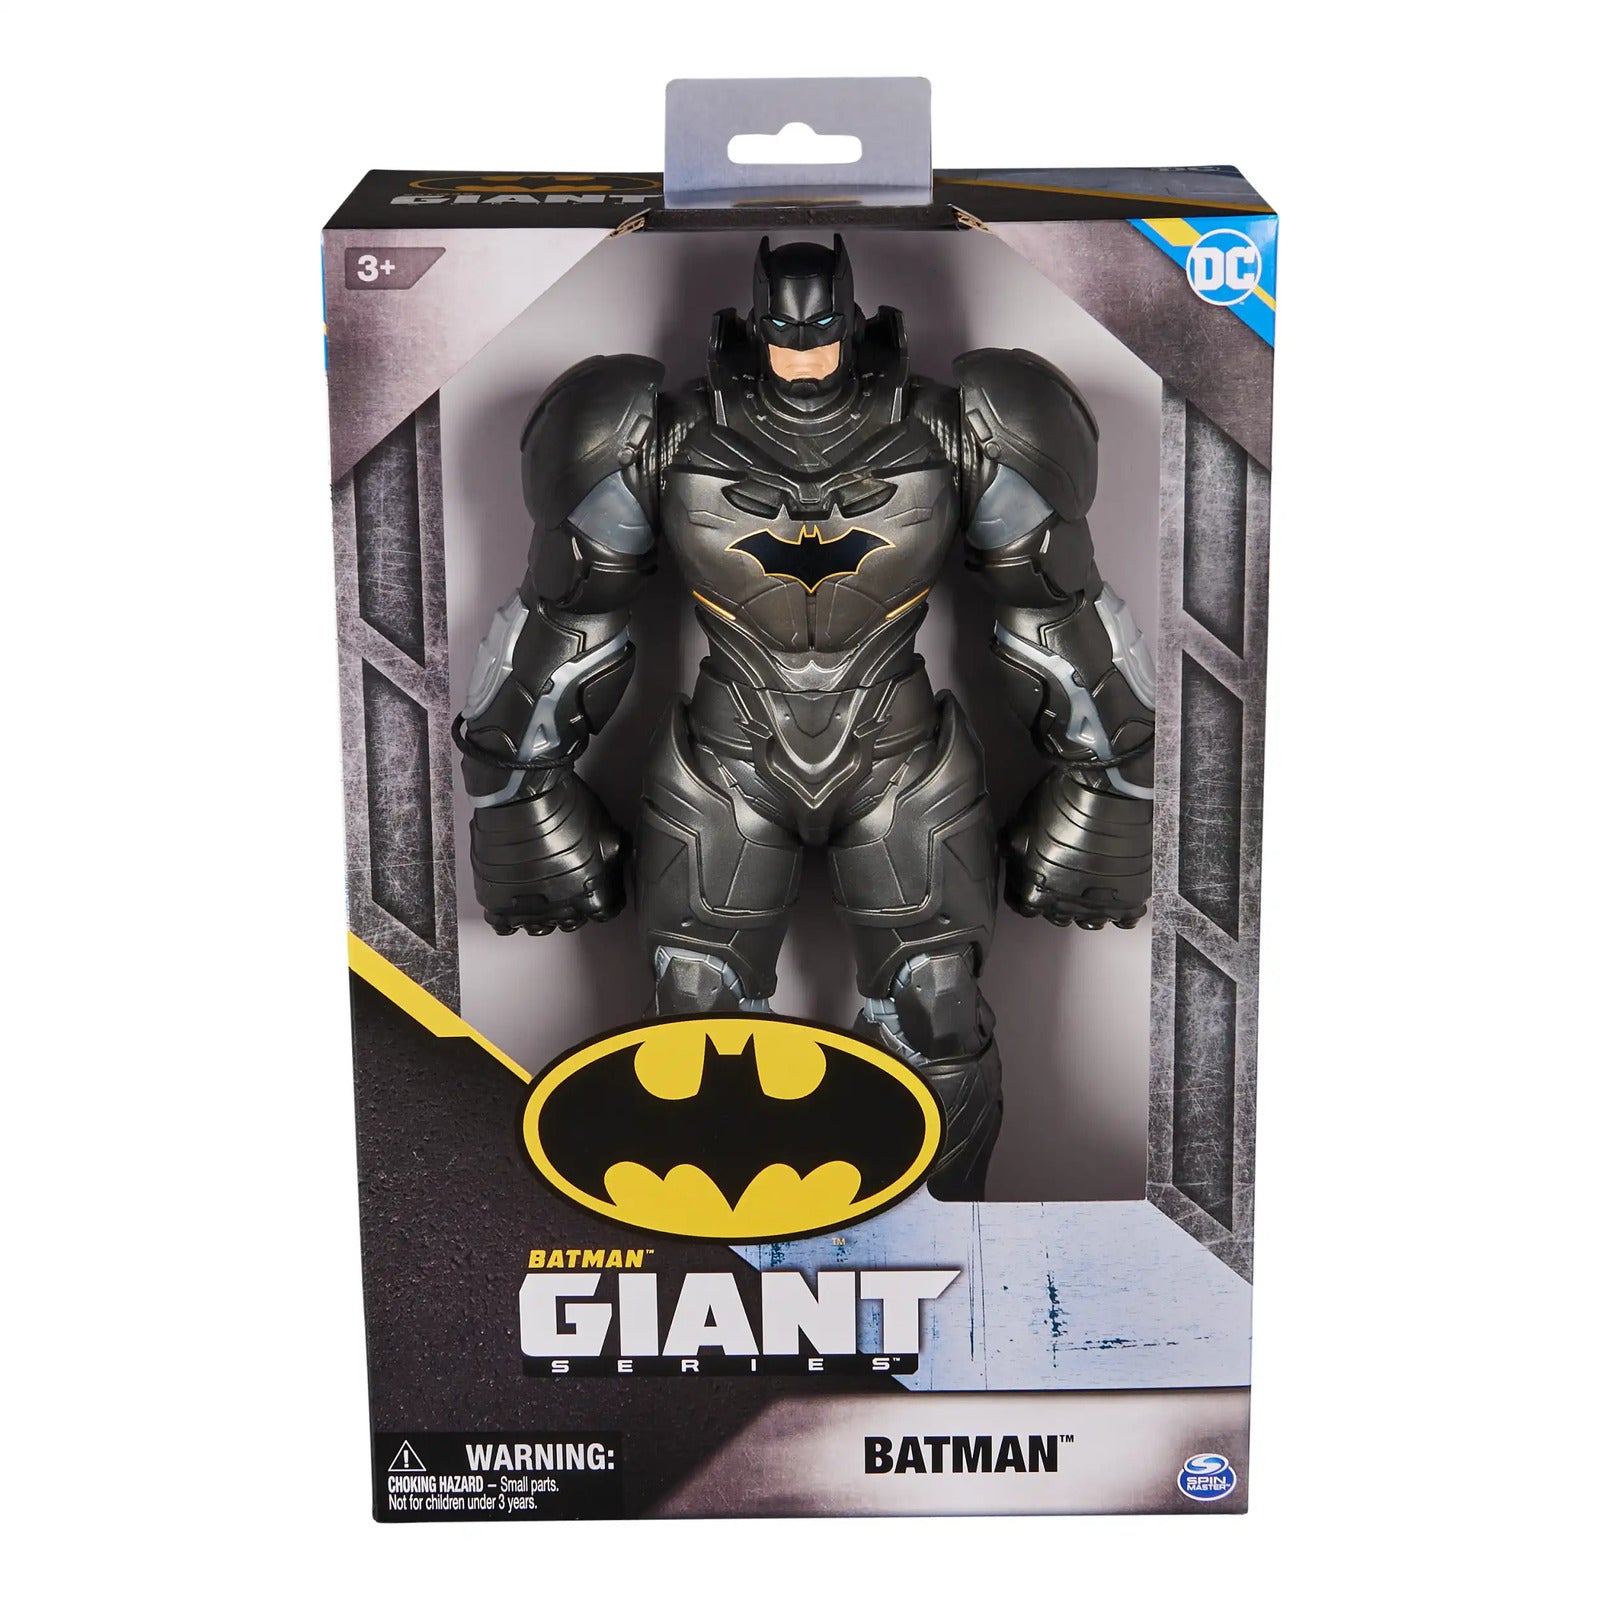 Batman Giant Series 30cm - Batman